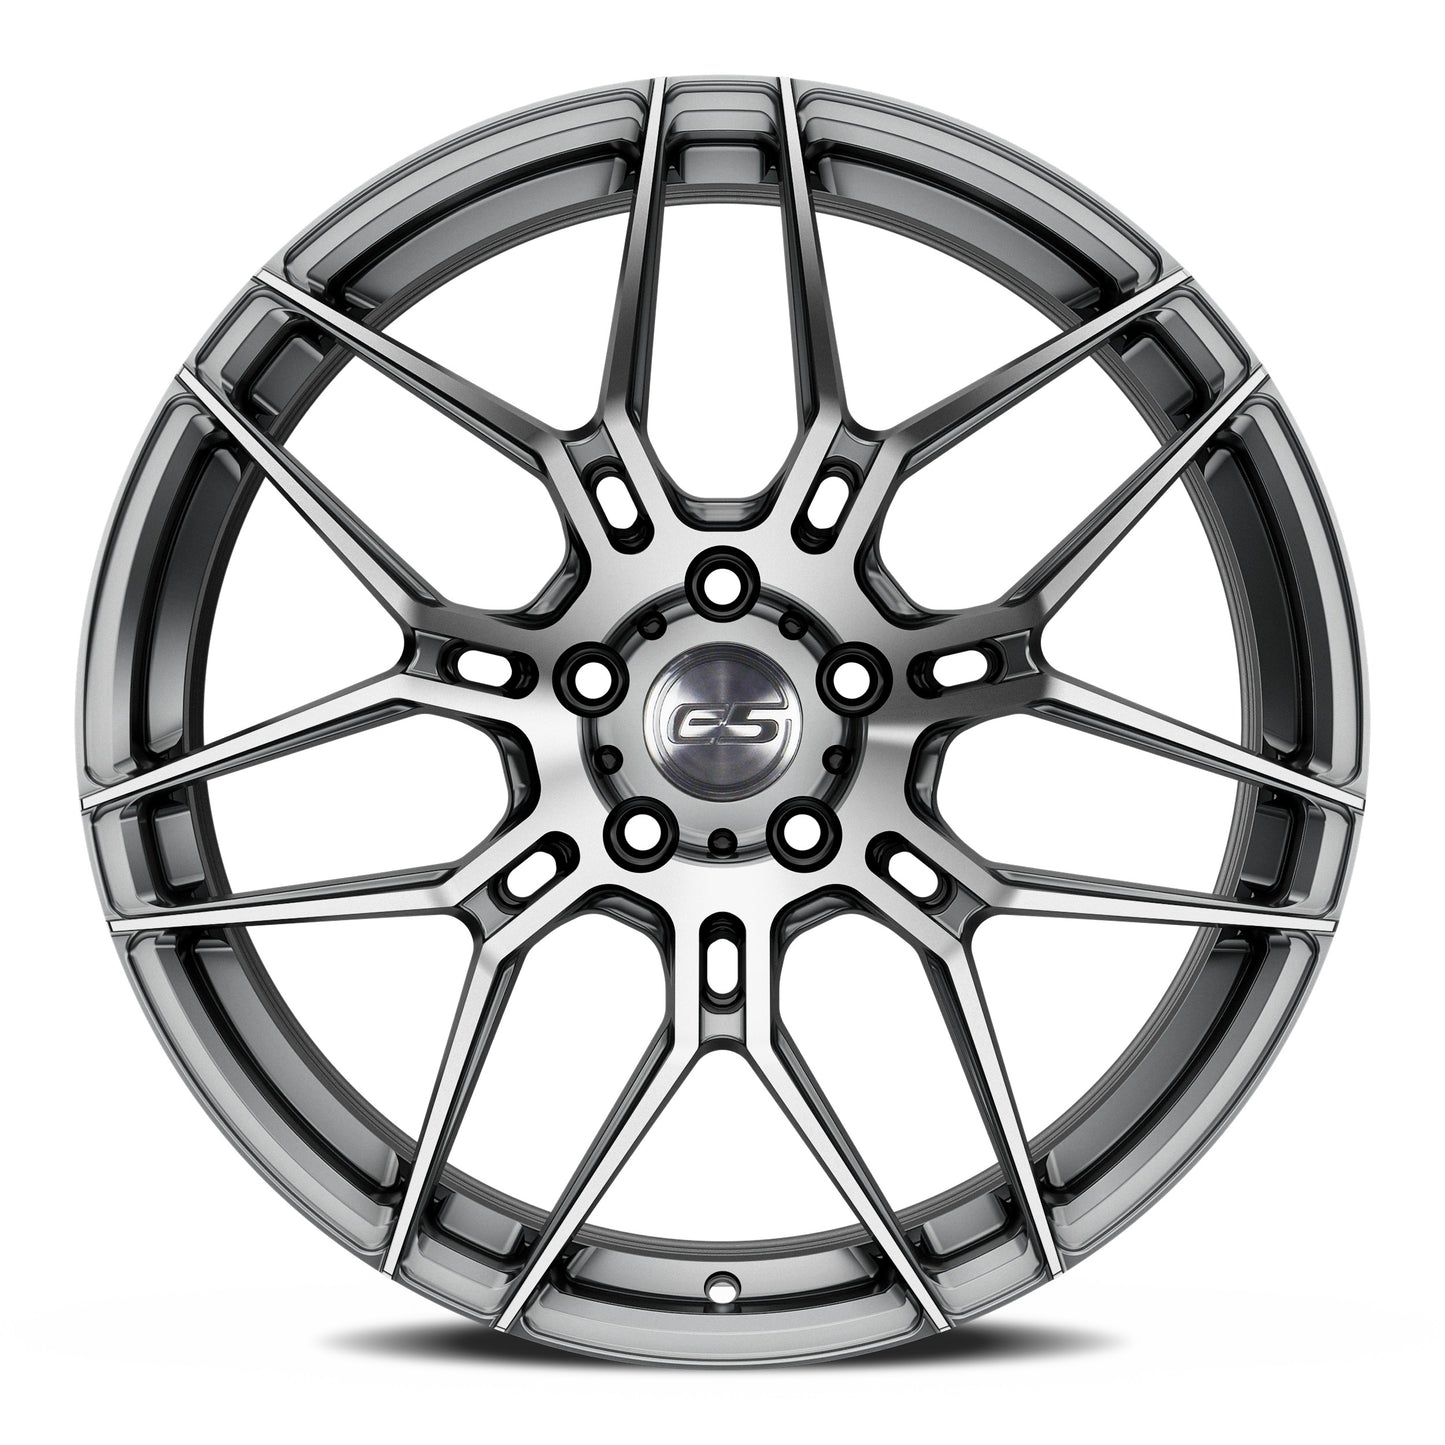 C8 Corvette E5 Speedway Wheel - Brushed Titanium (face)